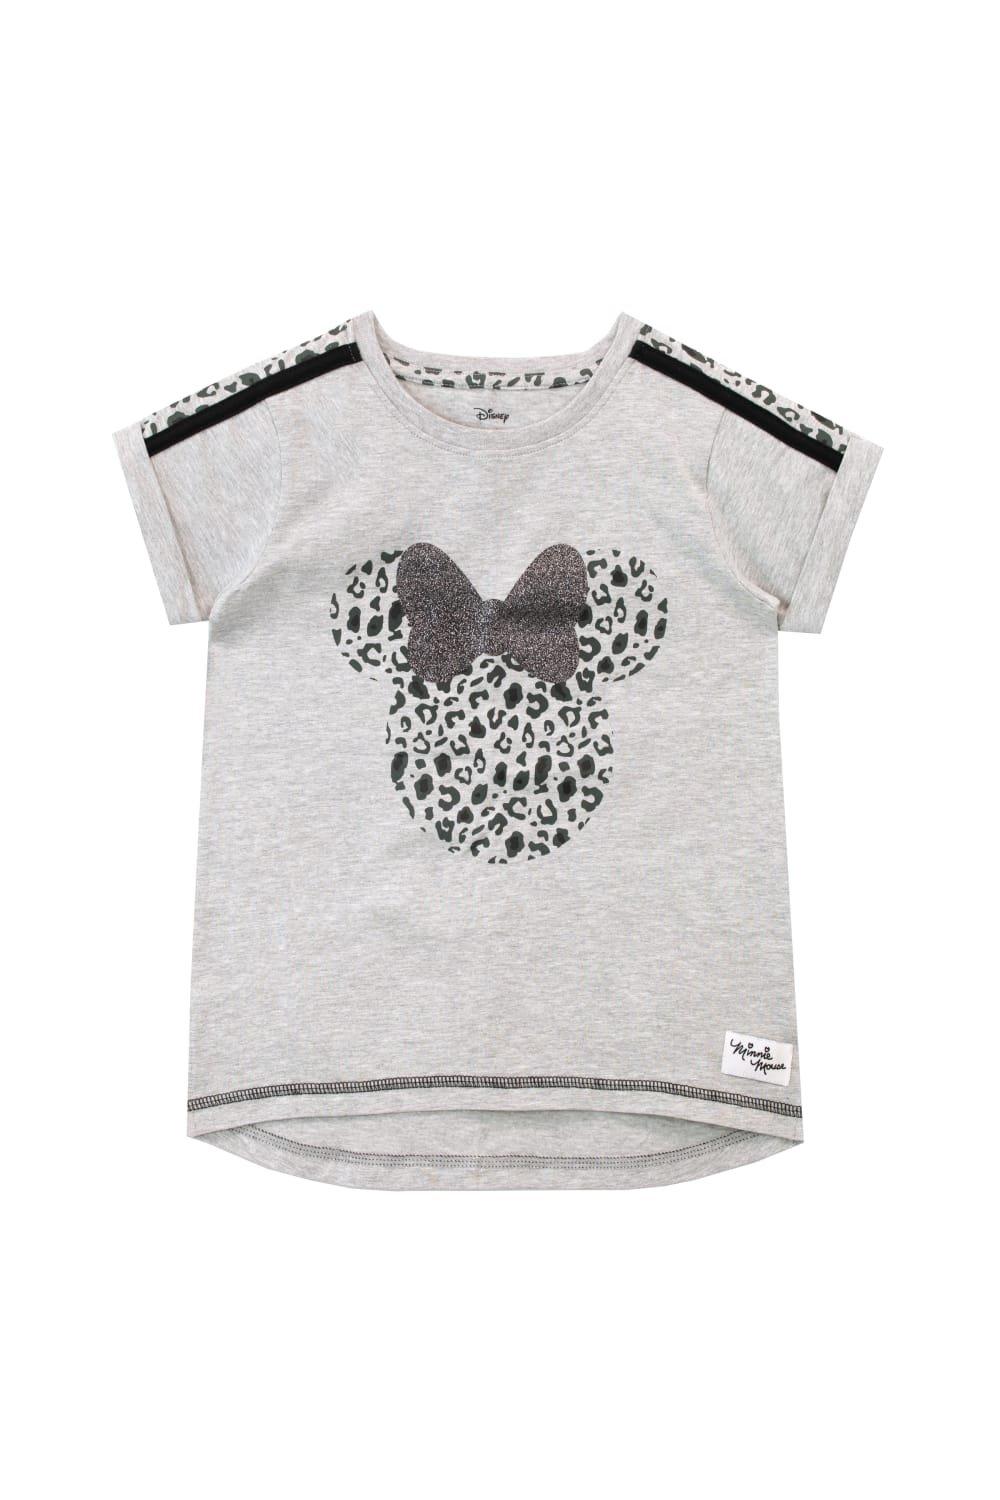 Minnie Mouse Leopard Print T-Shirt